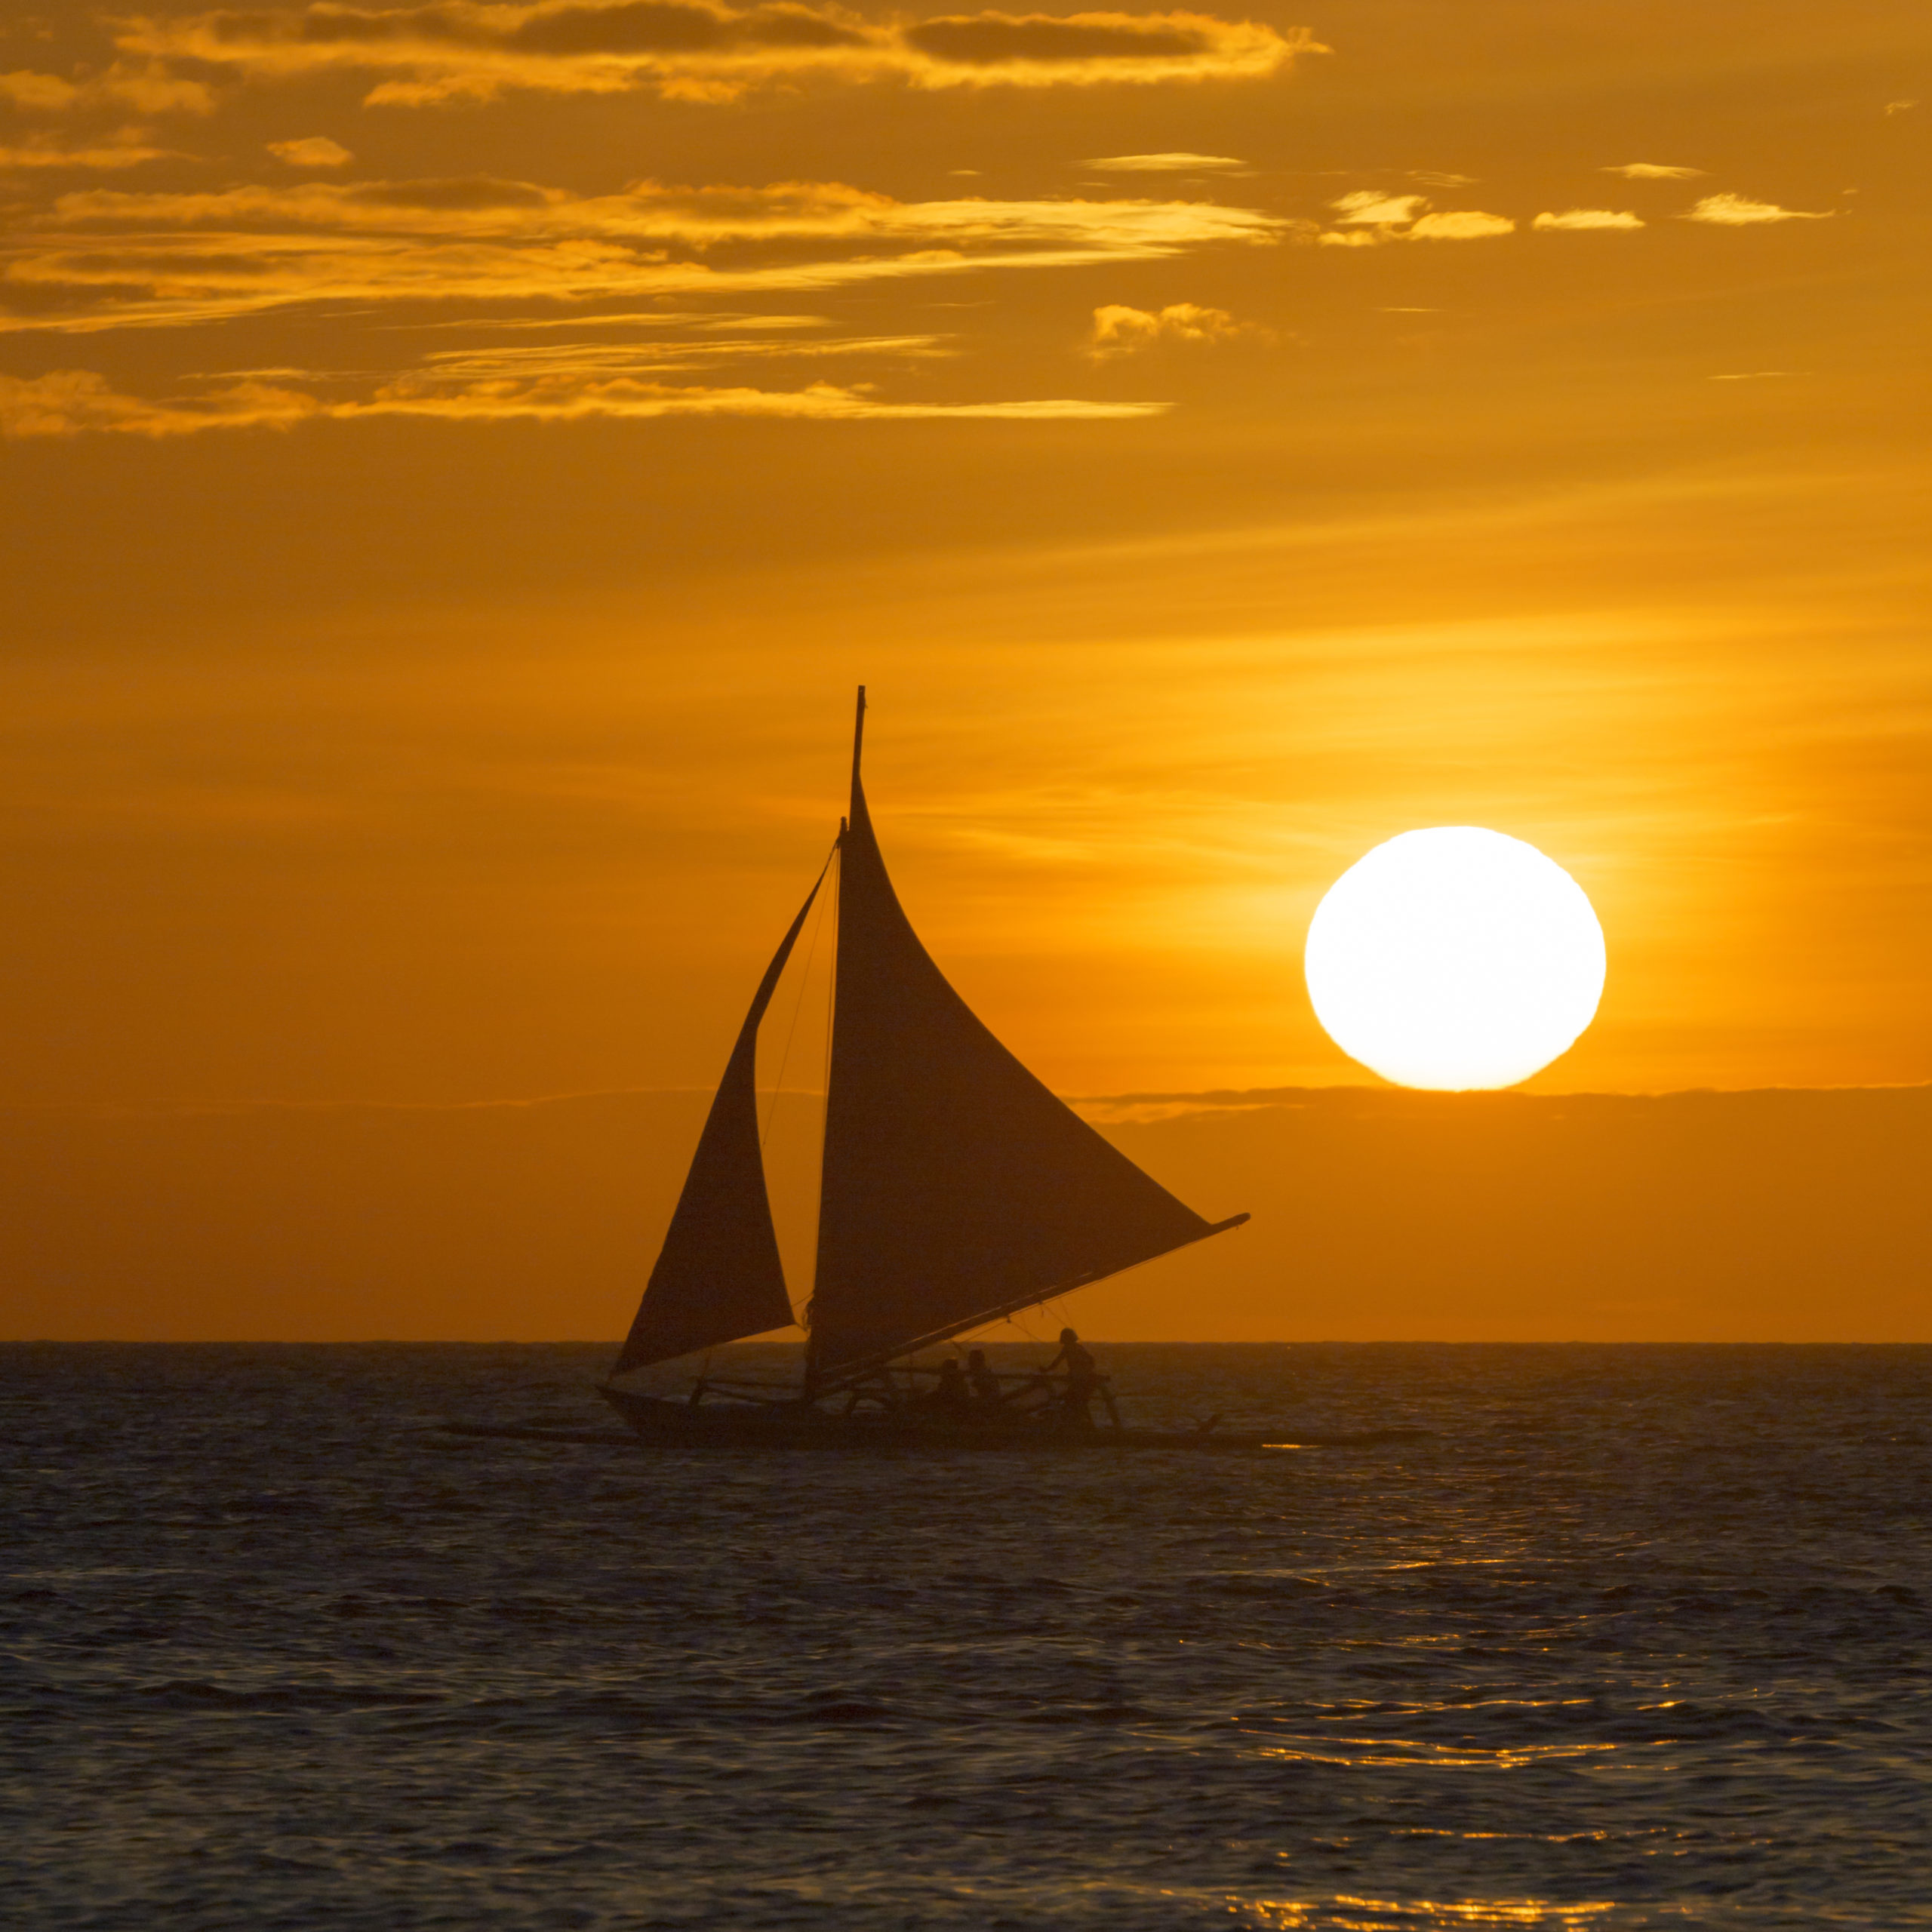 sailboat at sunset images